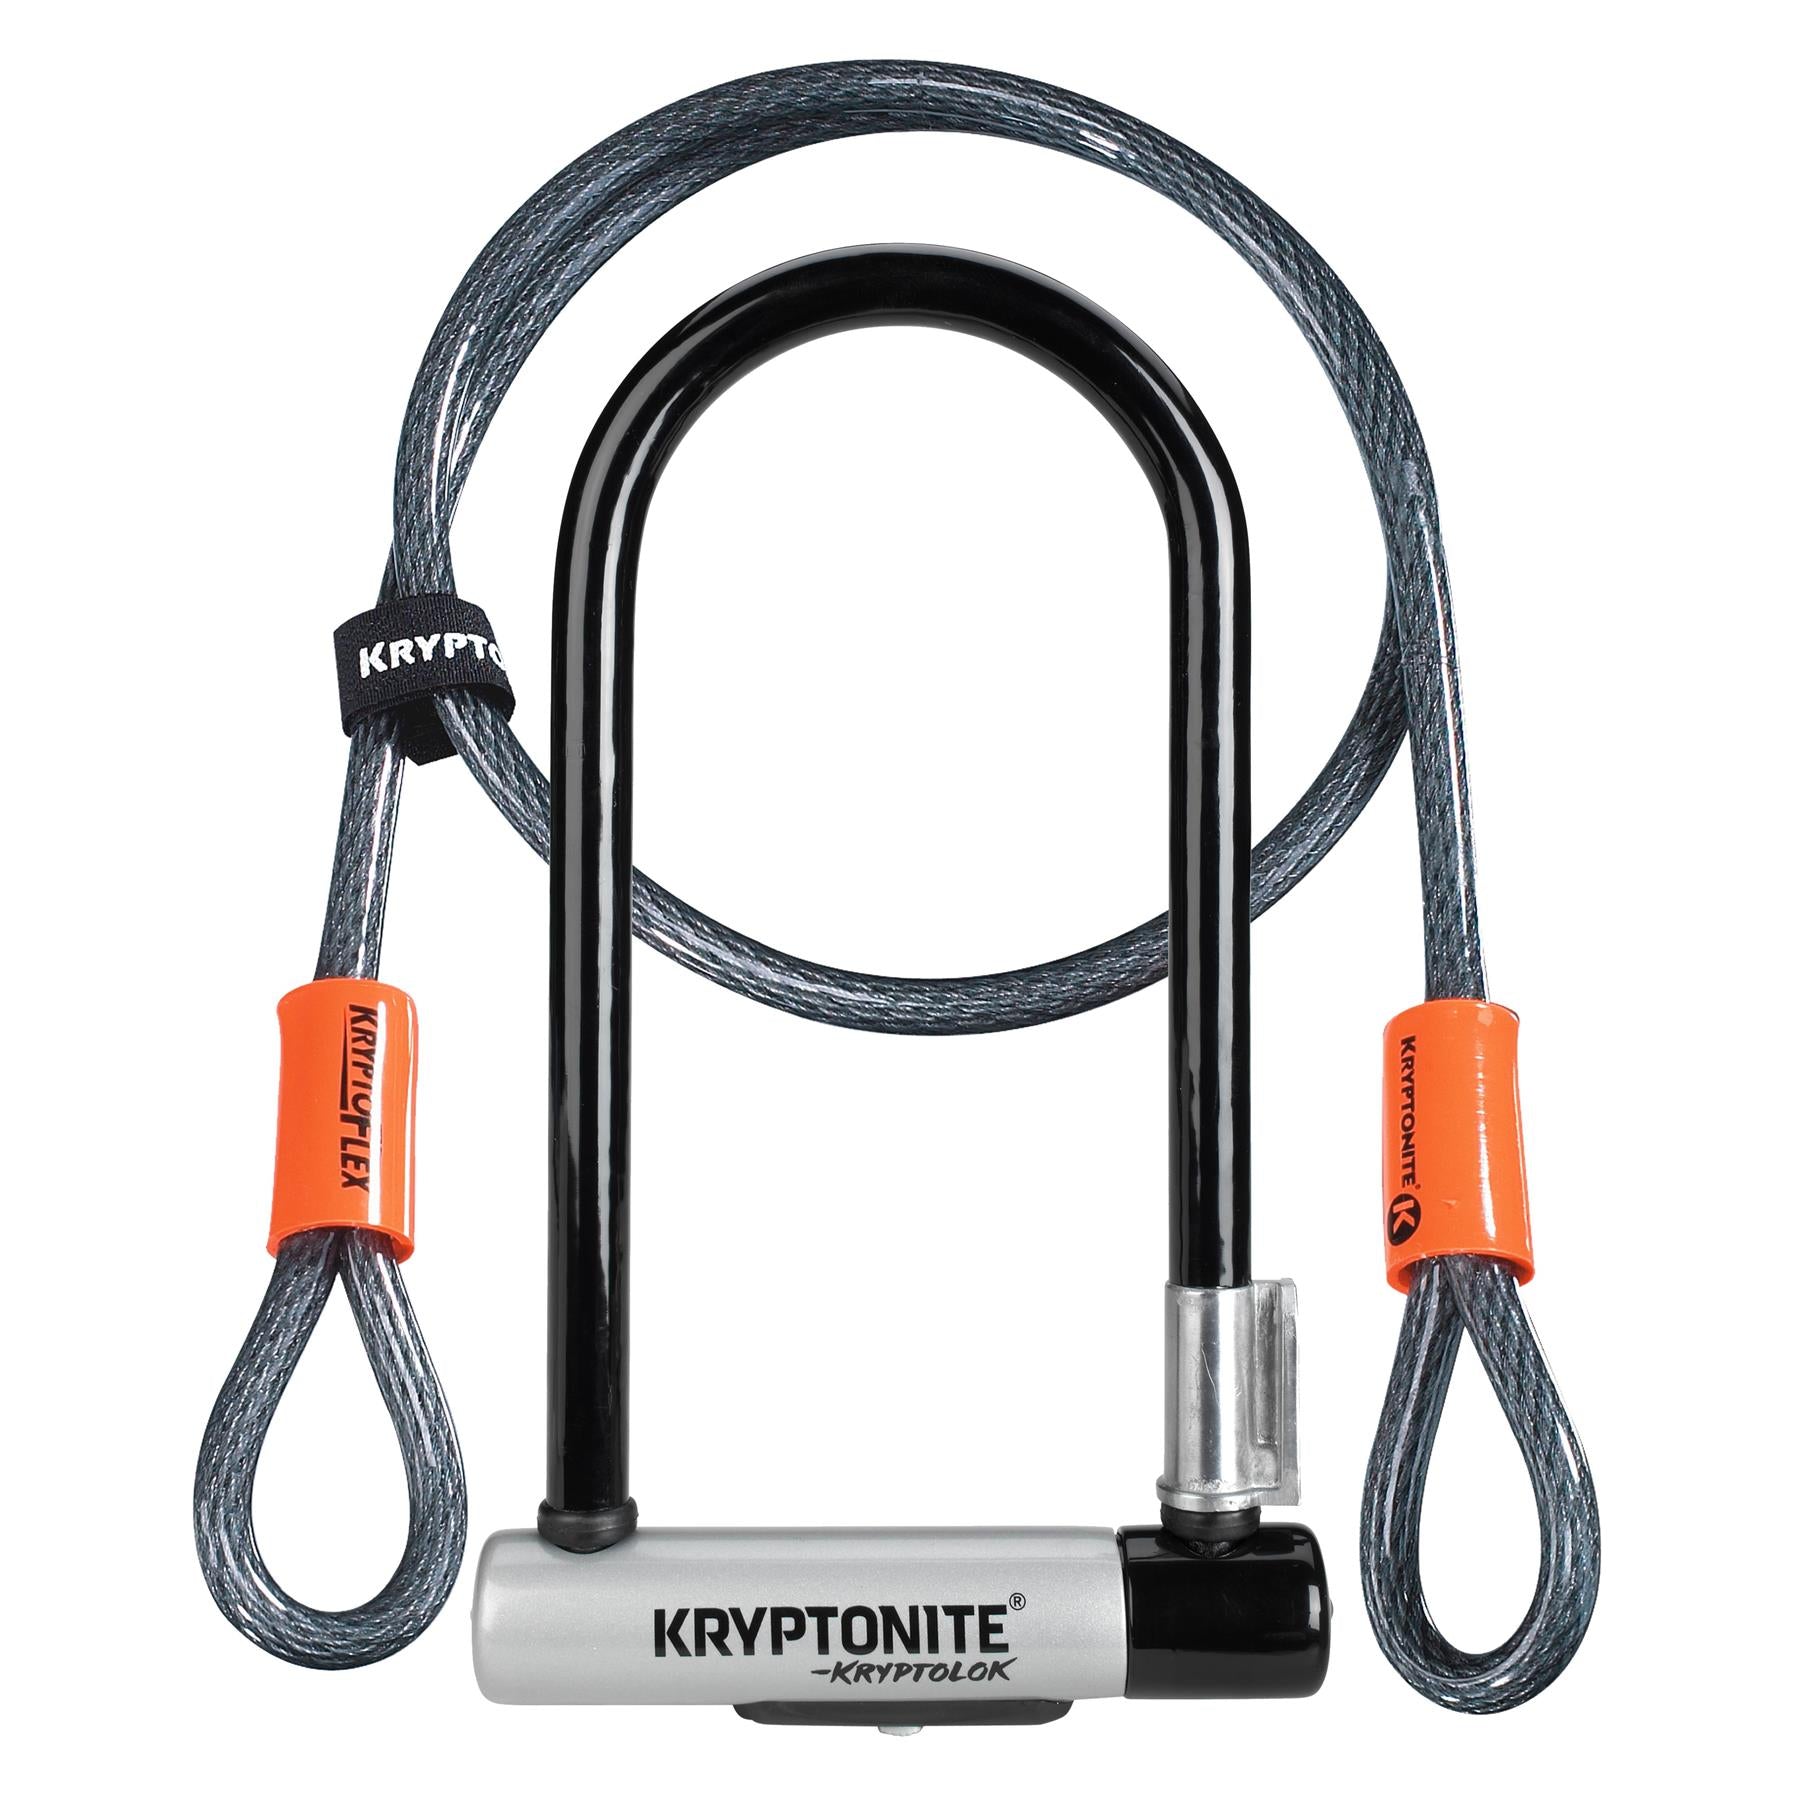 Kryptonite Kryptolock - U-Lock with Kryptoflex Cable